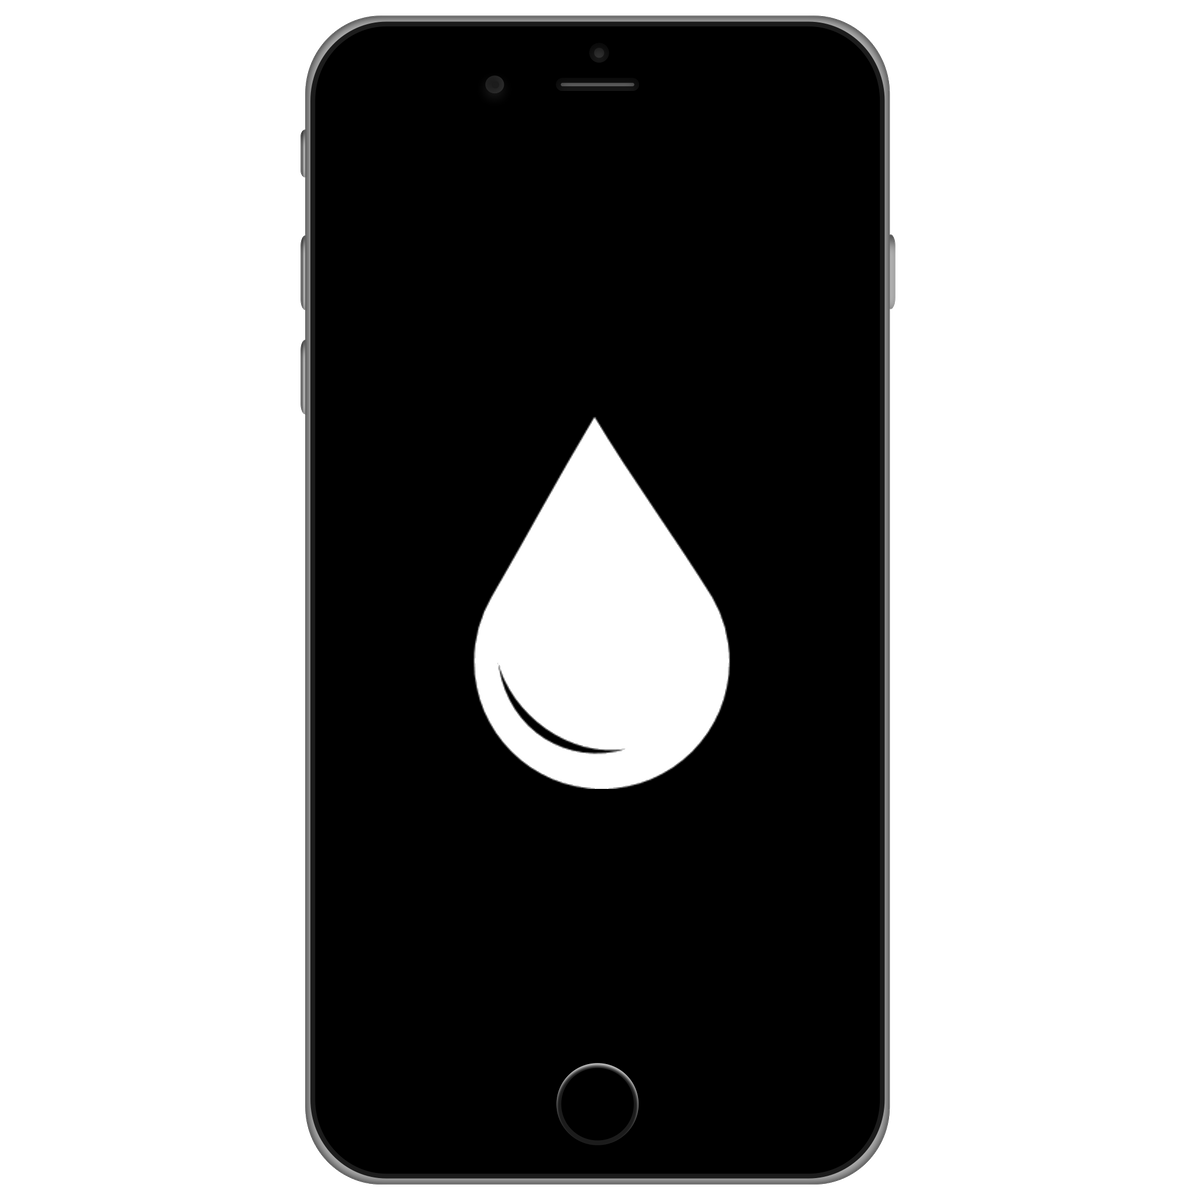 Repair iPhone Xr Water Damage - TechPros